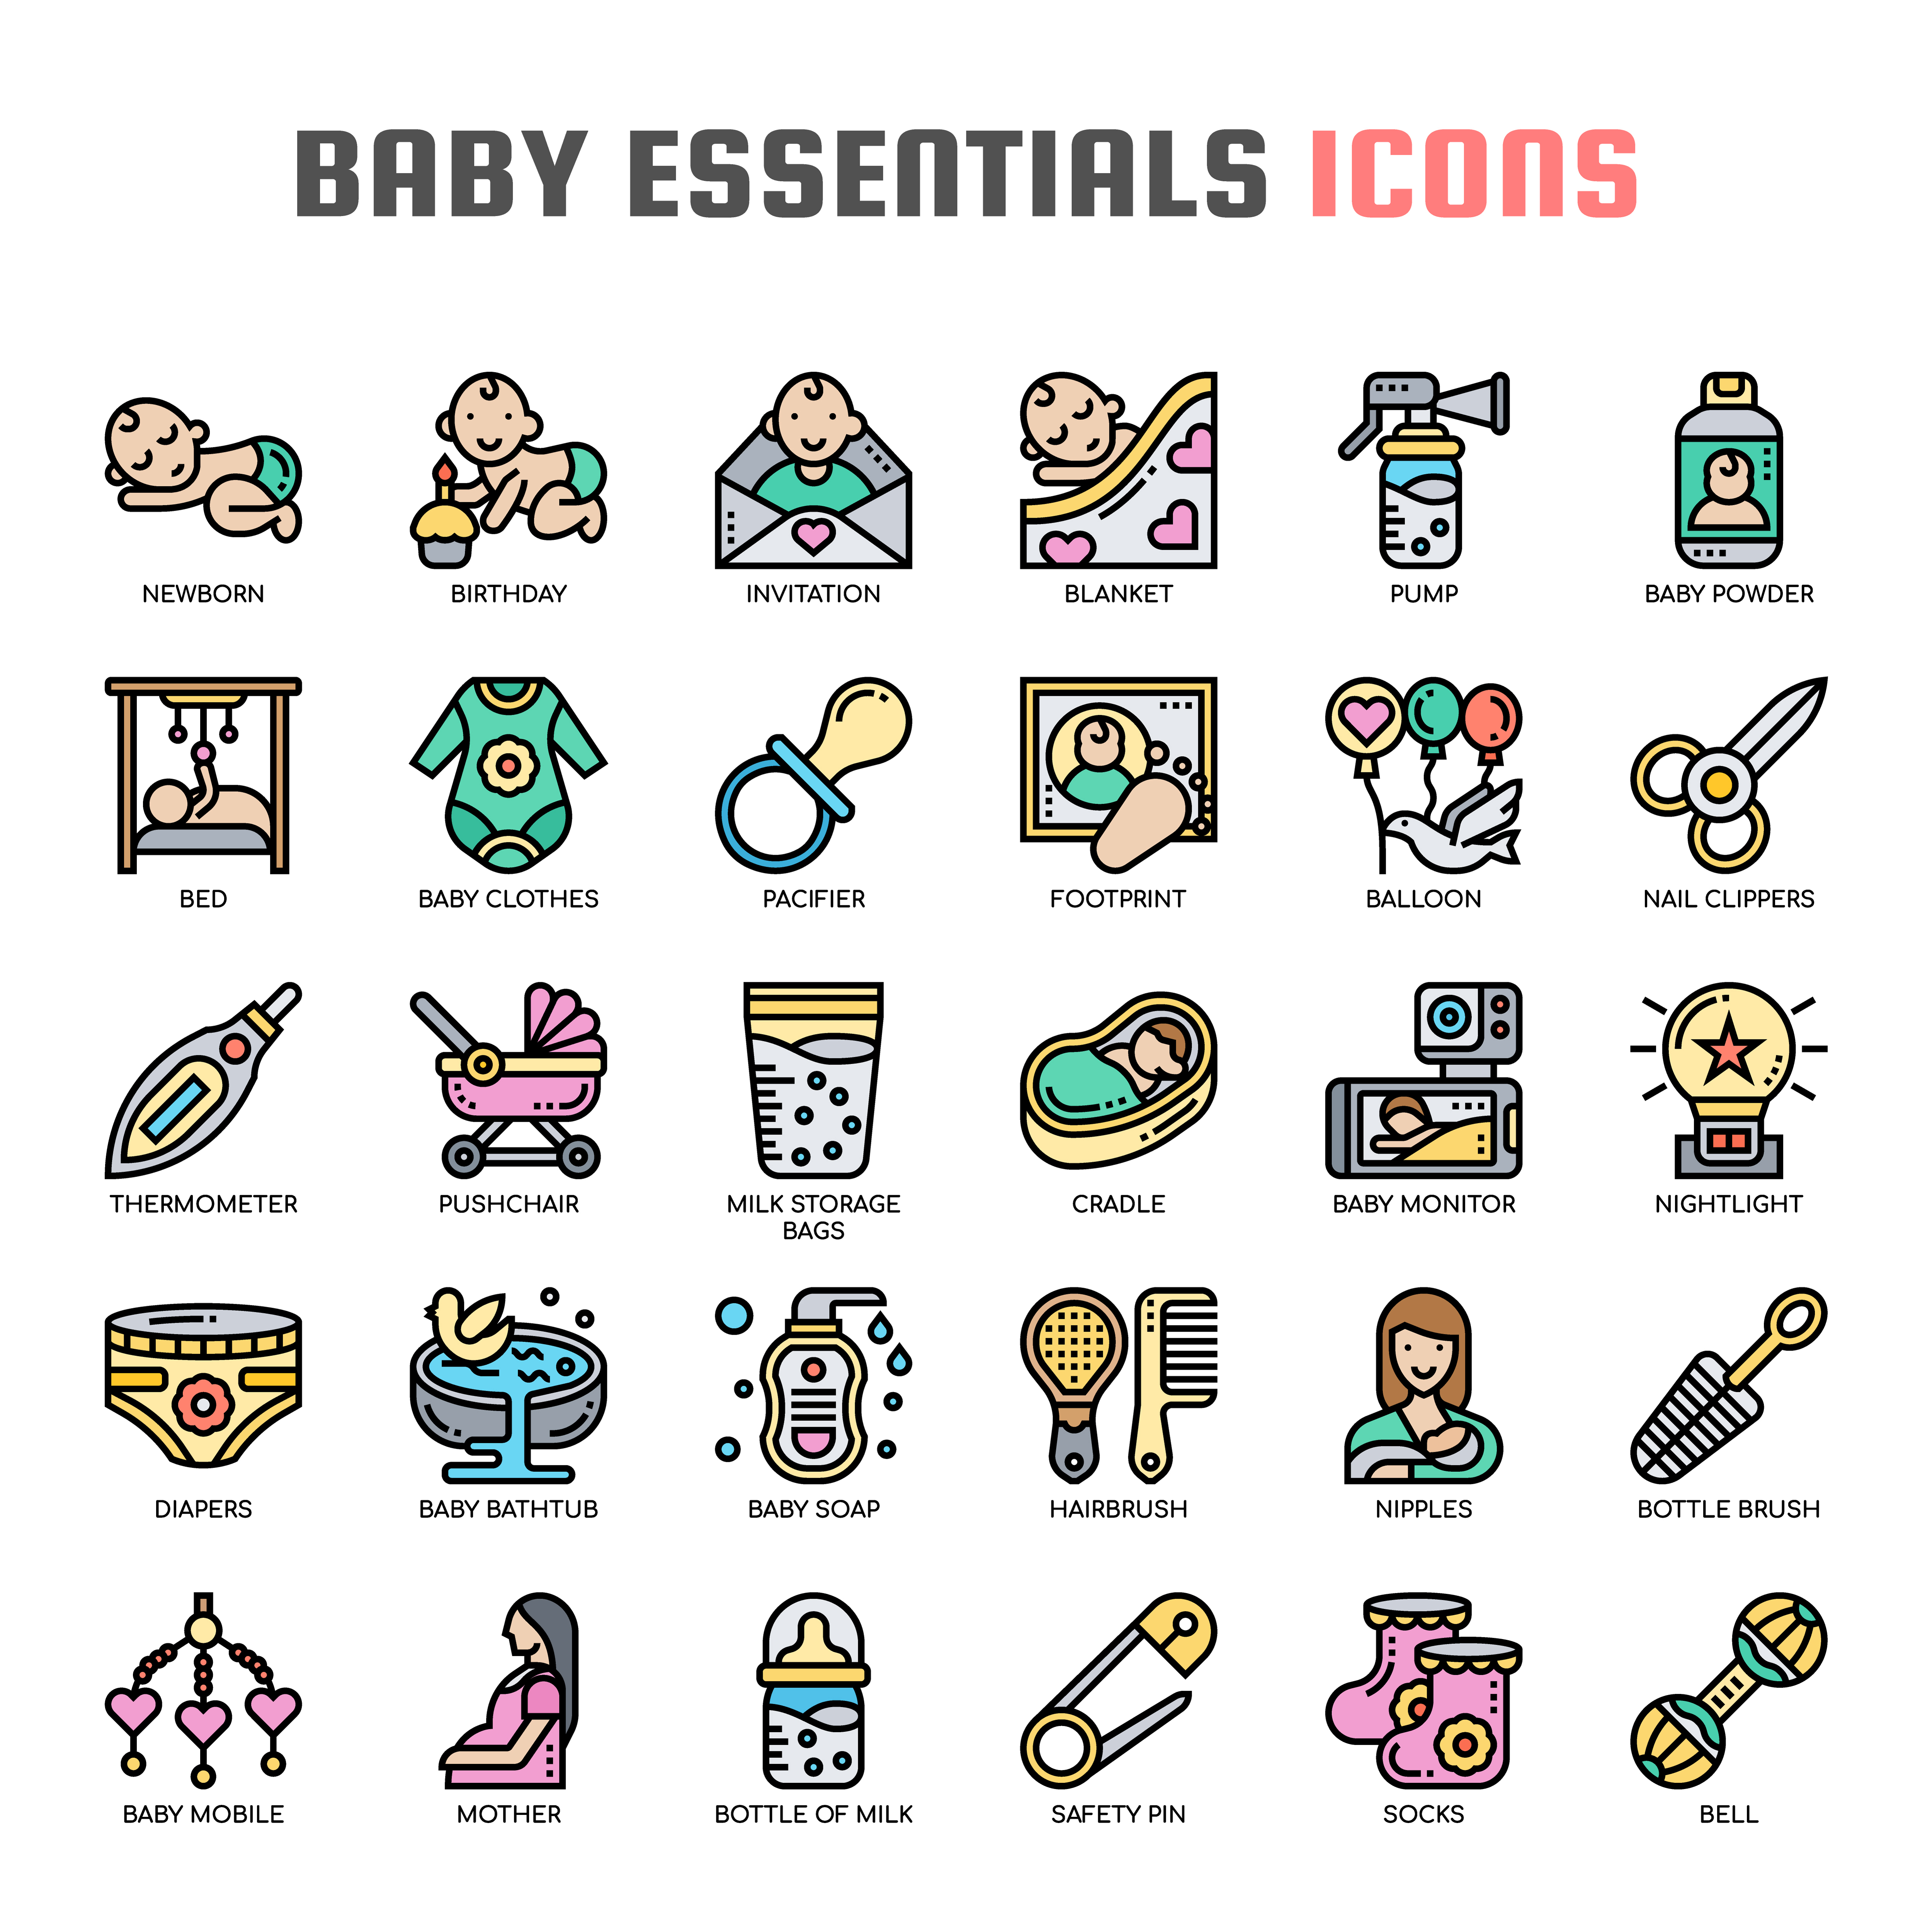 https://static.vecteezy.com/system/resources/previews/000/685/769/original/baby-essentials-thin-line-icons-vector.jpg